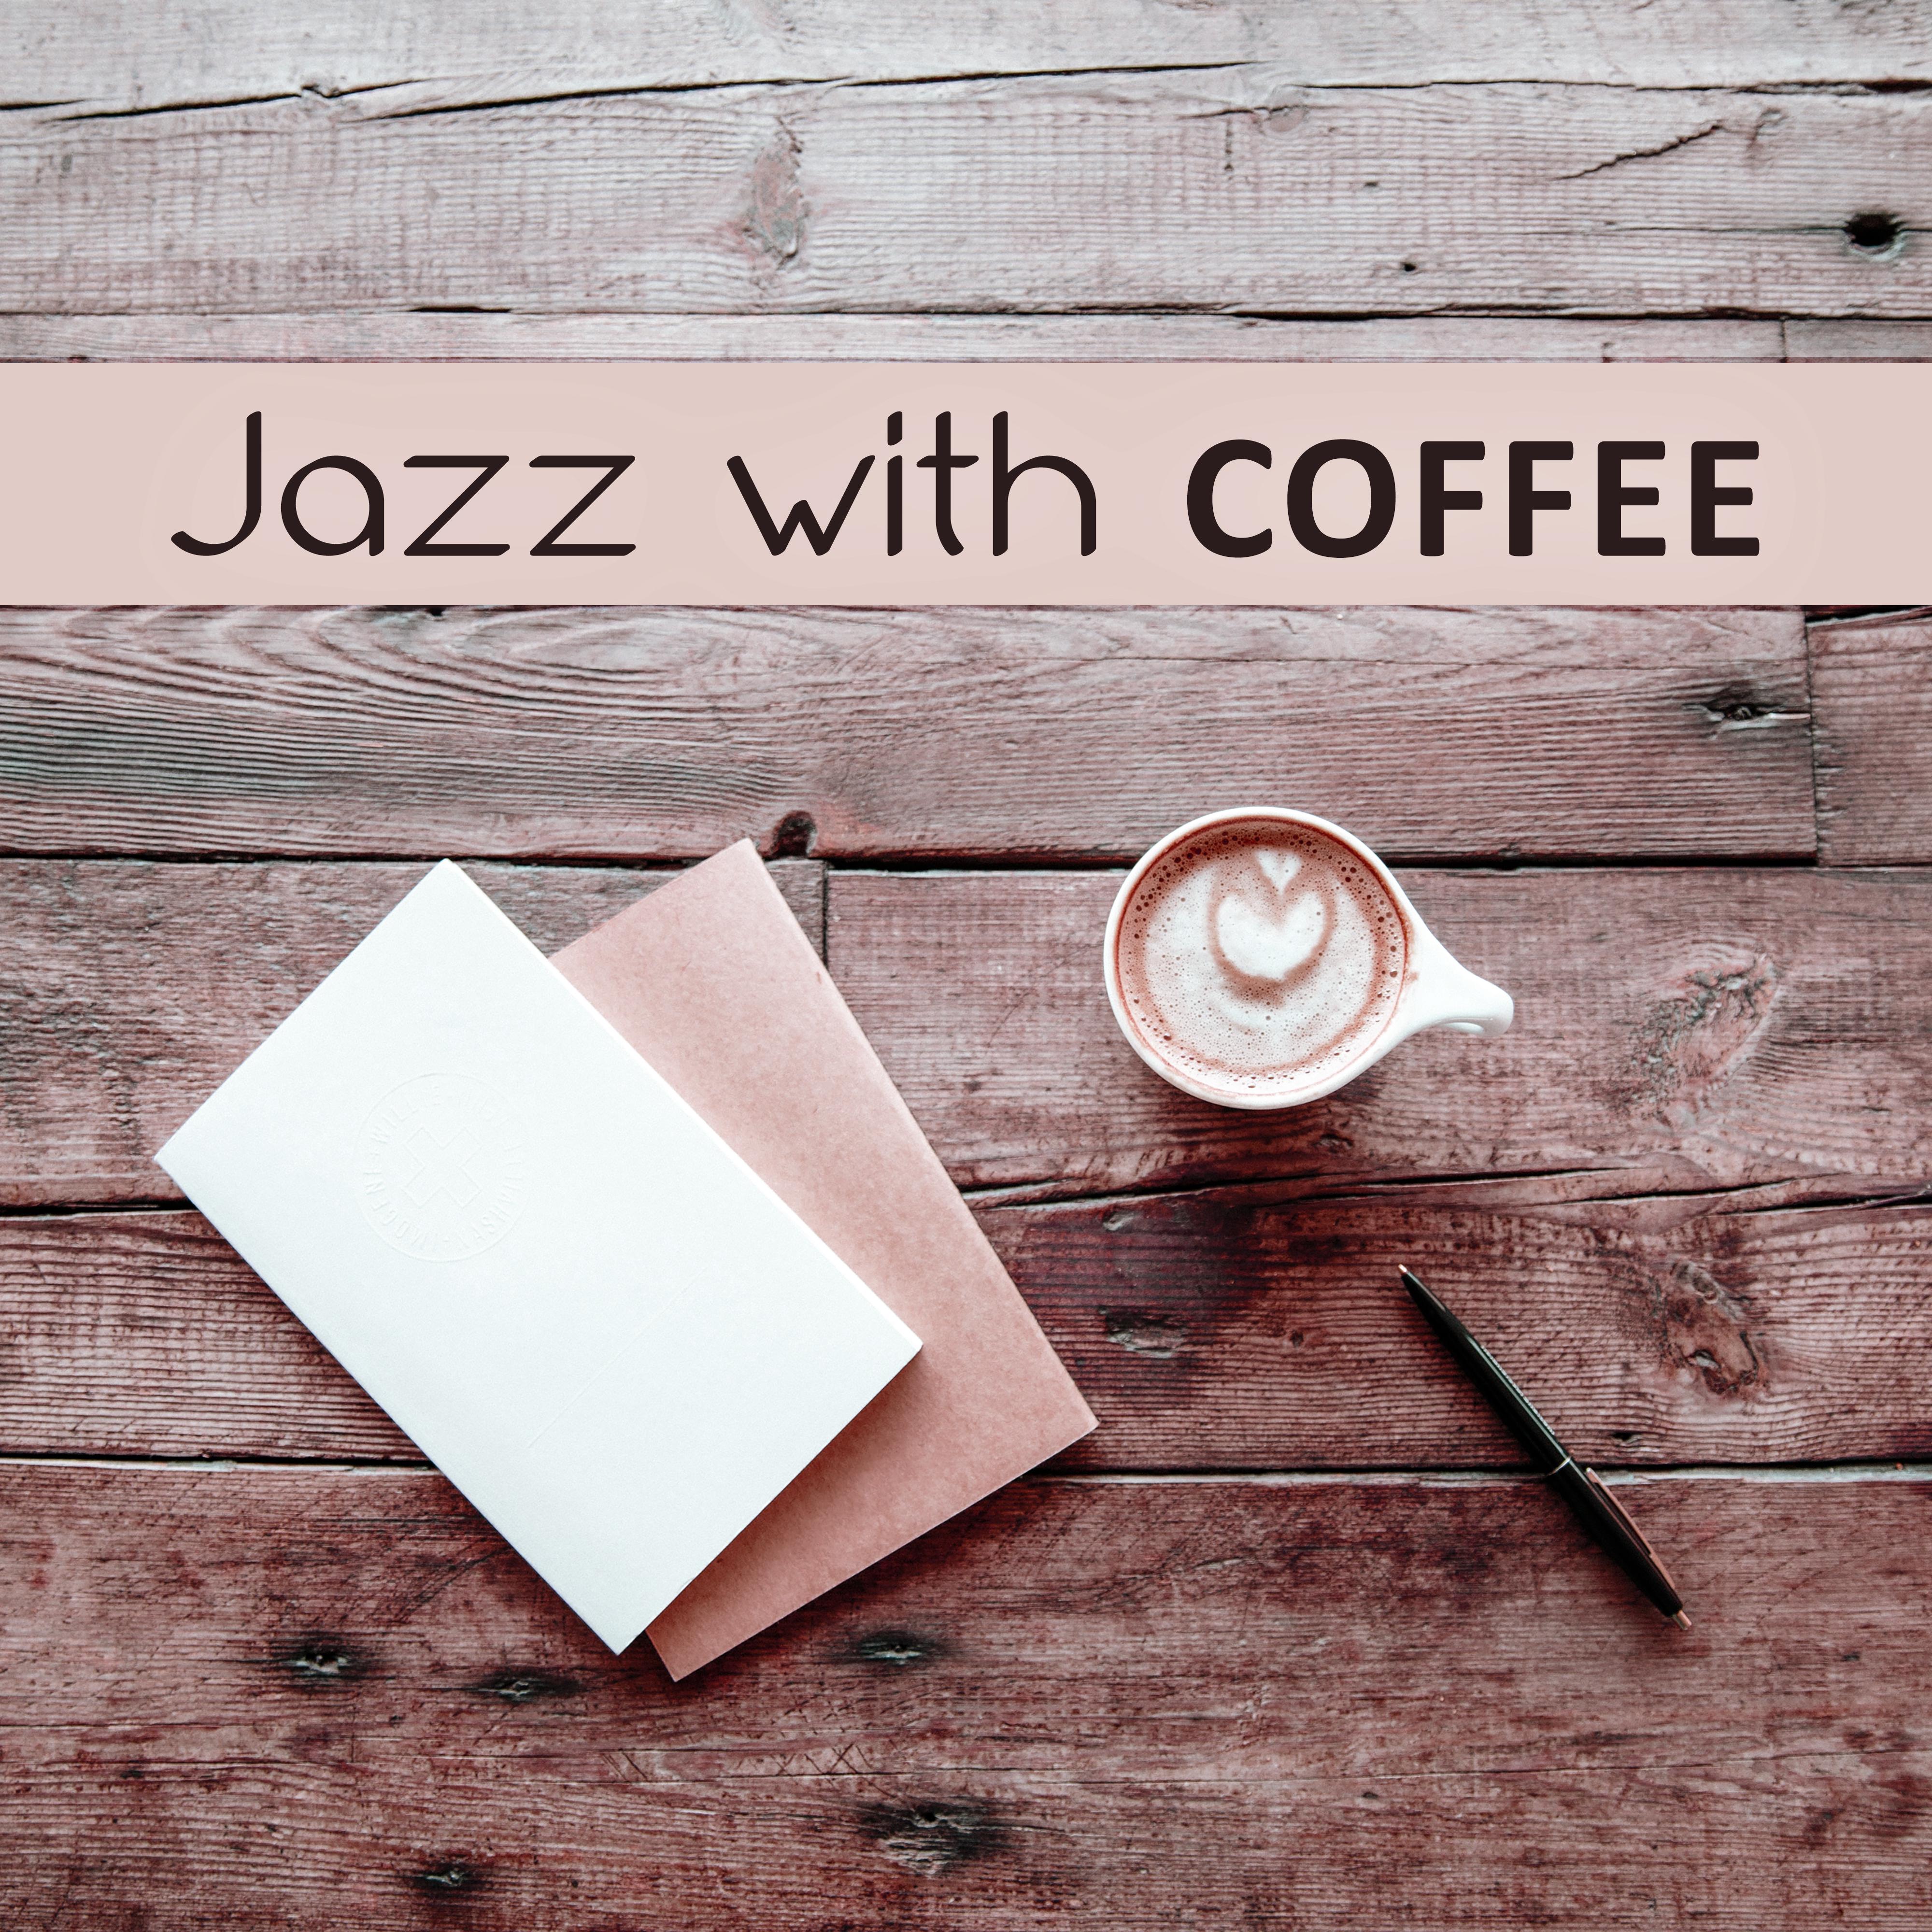 Jazz with Coffee - Coffee Mug, Pacific Time, Moment of Good Music, Wonderful Sensation Sensual